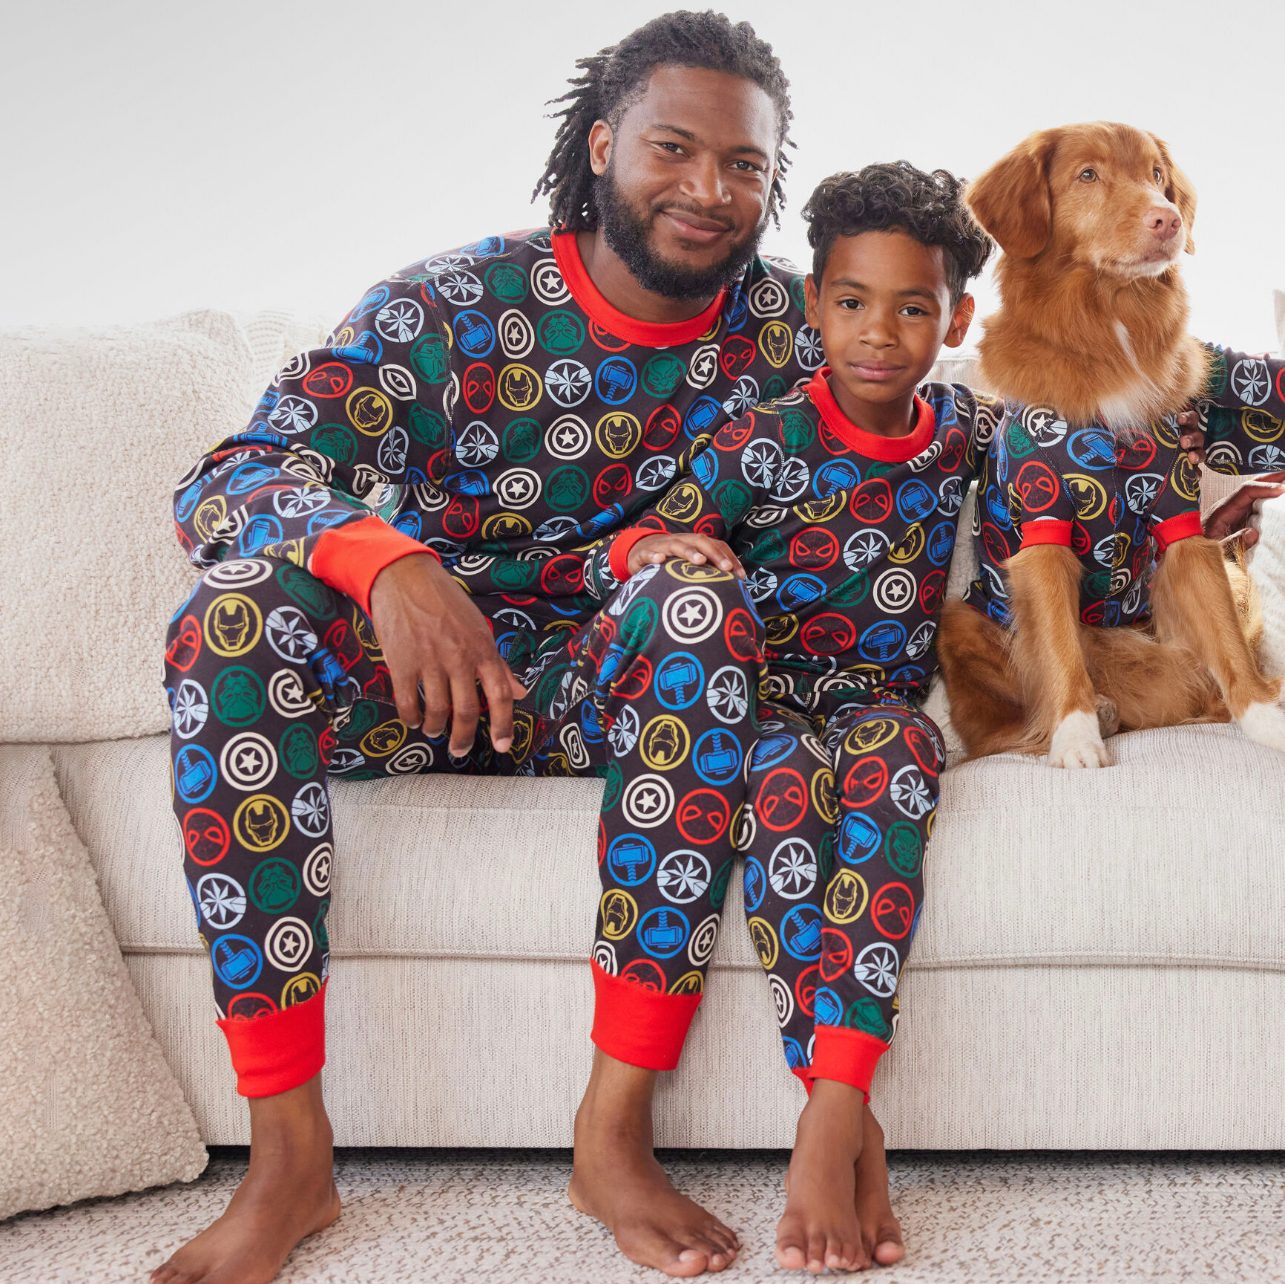 Grinch Family Christmas Pajamas - Matching Couple Pajama Sets With Socks  for Men and Women